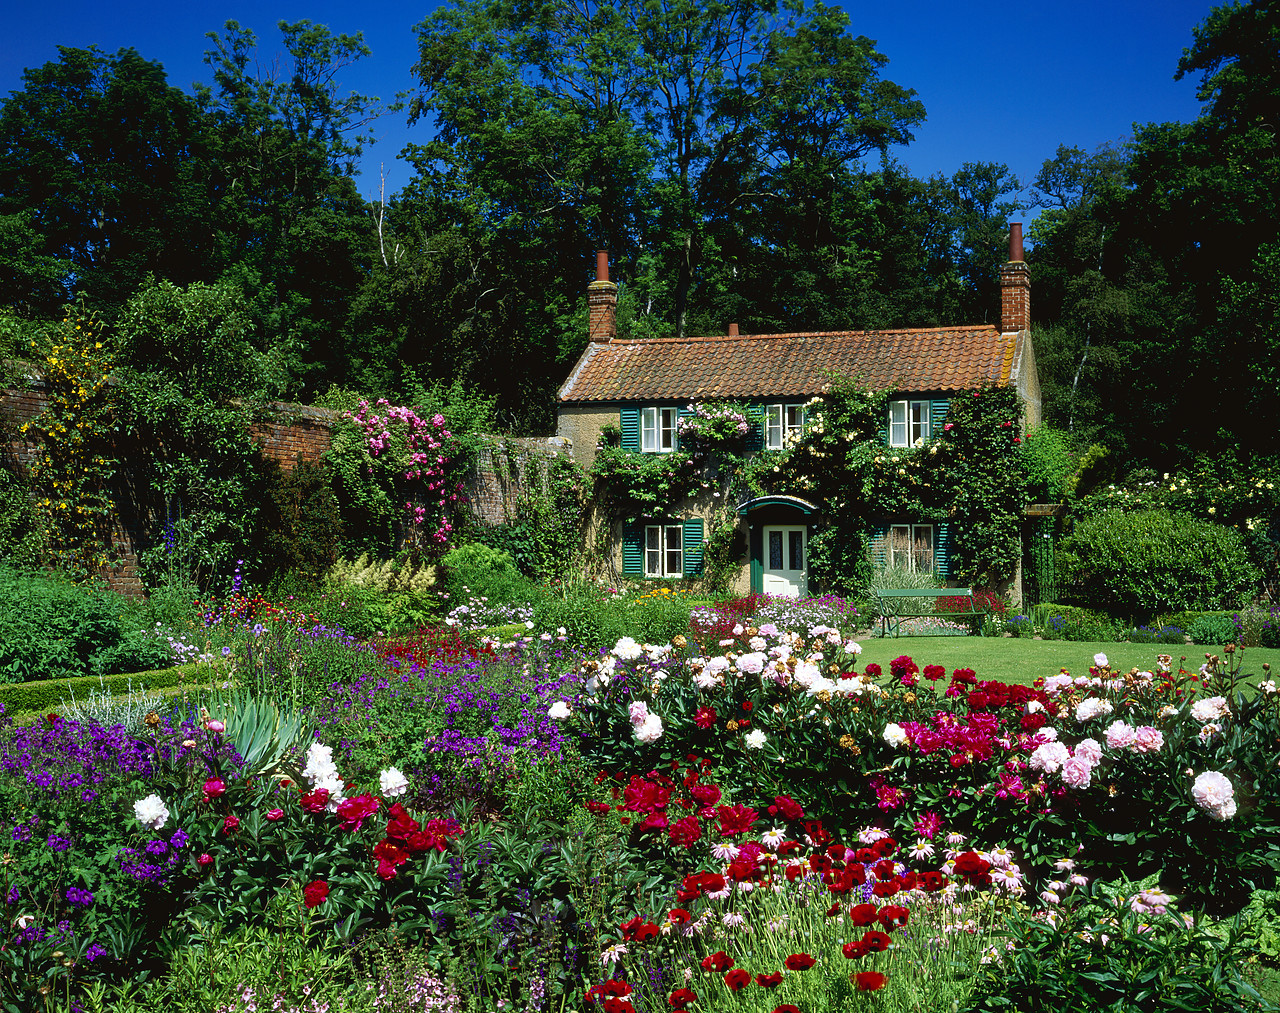 #955546-1 - Gardener's Cottage, Hoveton Hall Gardens, Norfolk, England